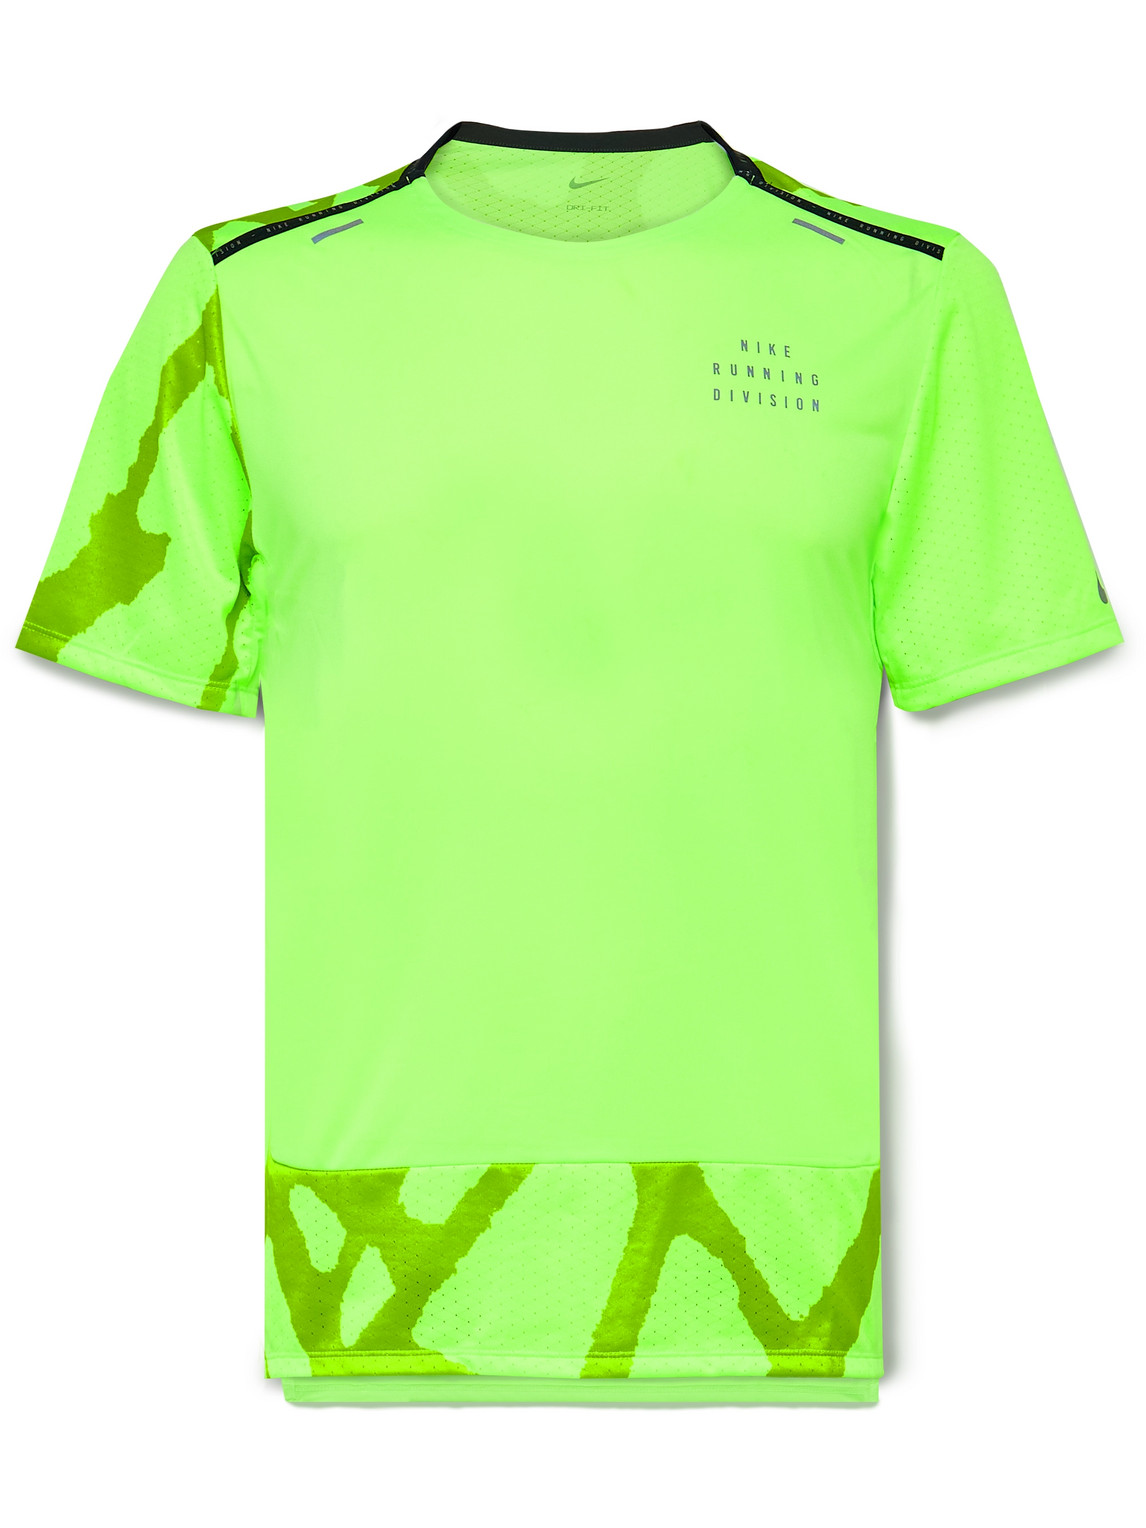 Nike Running Rise 365 Run Division Printed Dri-FIT T-Shirt